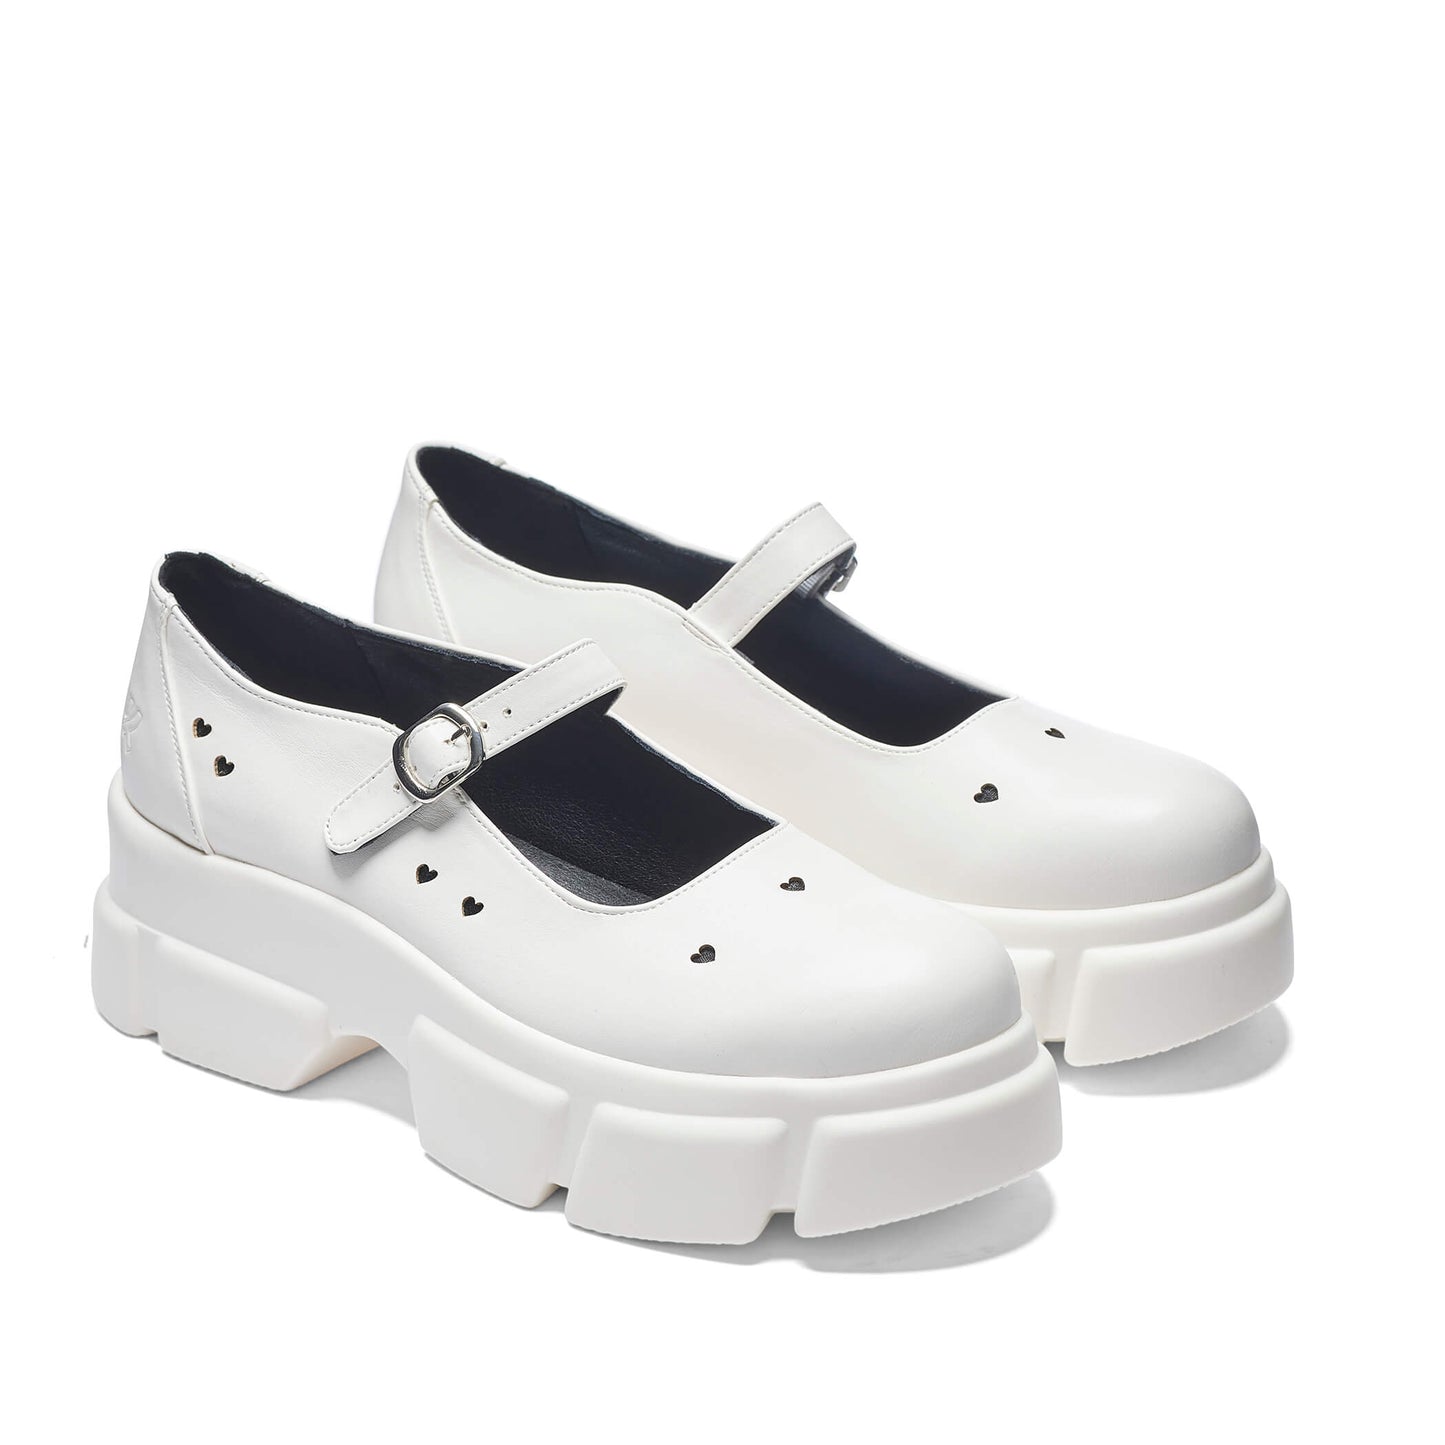 Harmony Heart Mary Jane Shoes - White - Shoes - KOI Footwear - White - Three-Quarter View